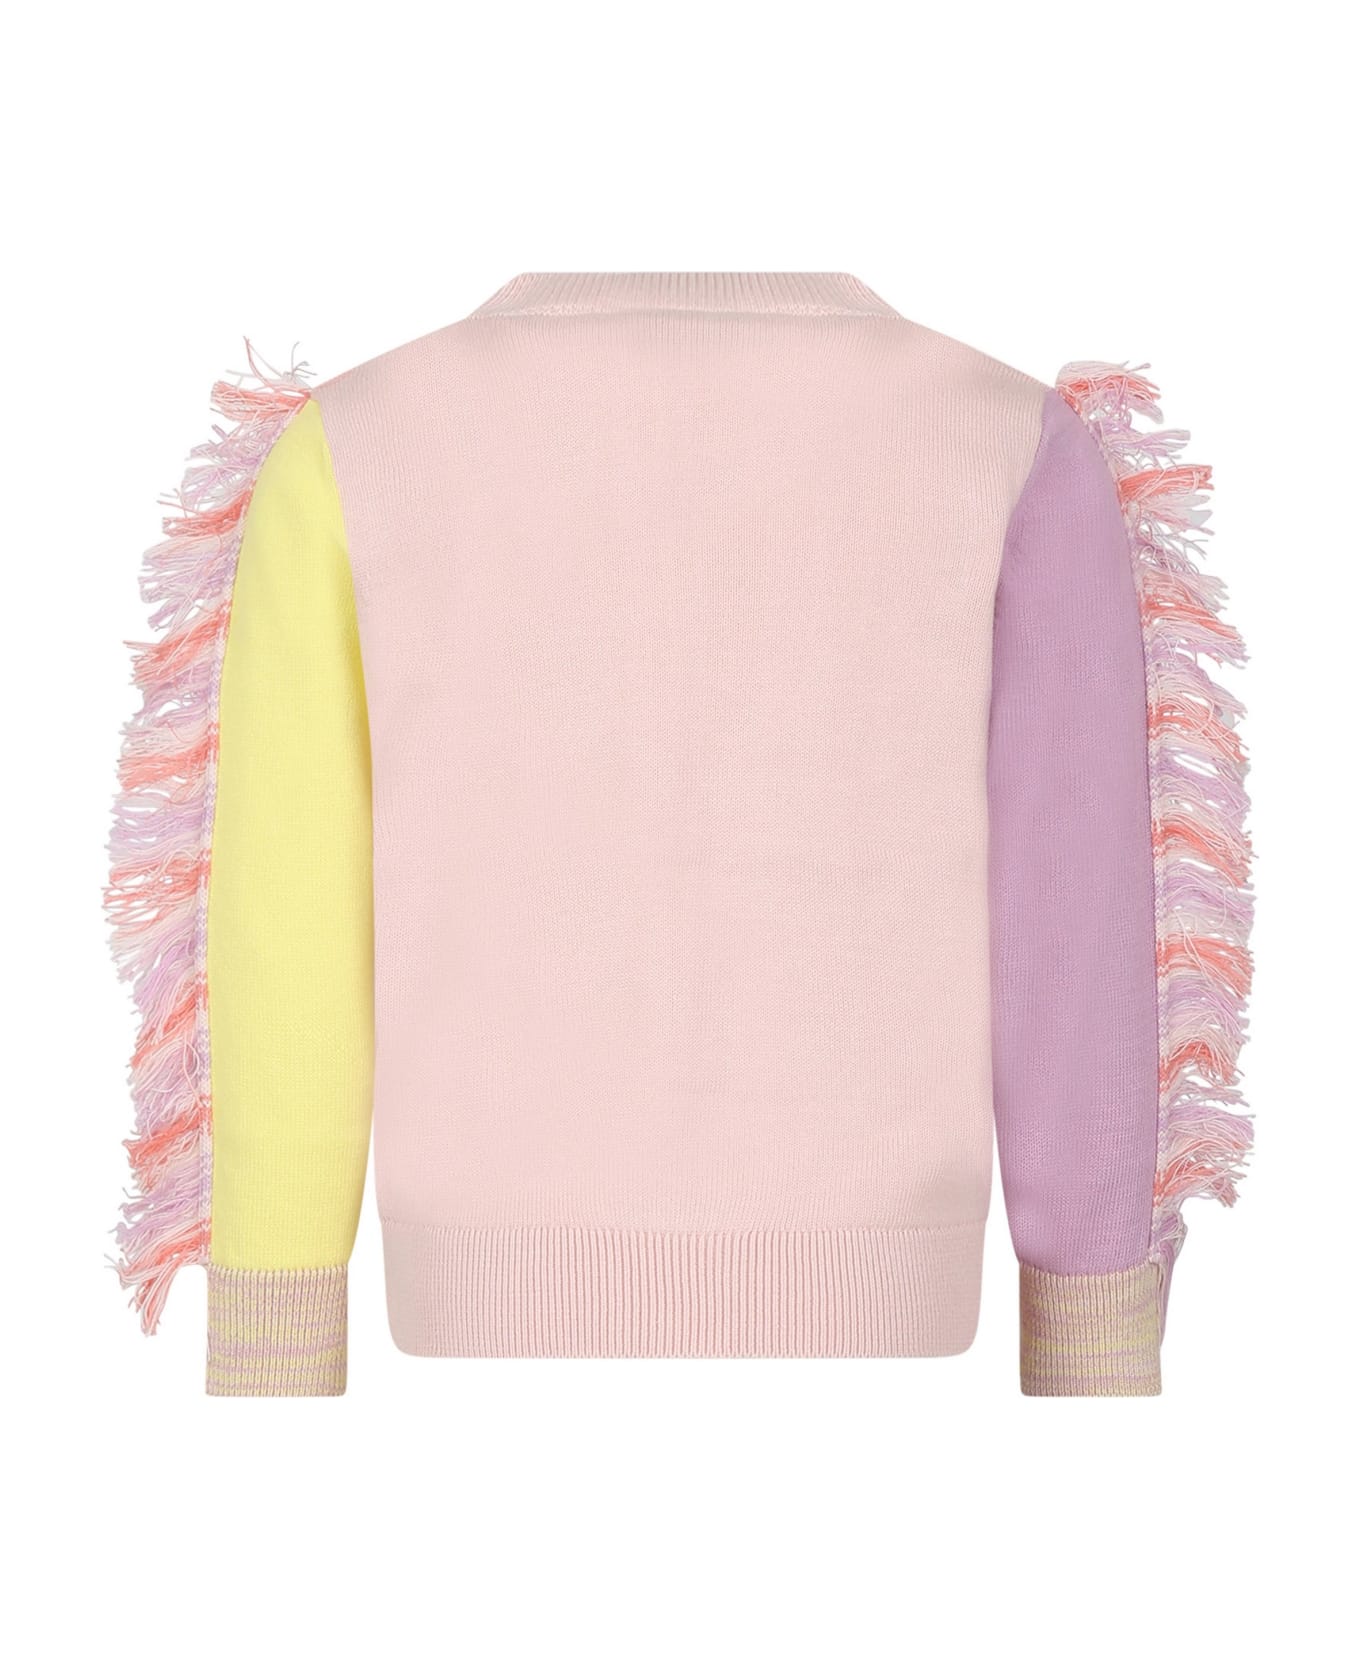 Stella McCartney Kids Multicolor Sweater For Girl With Unicorn - Multicolor